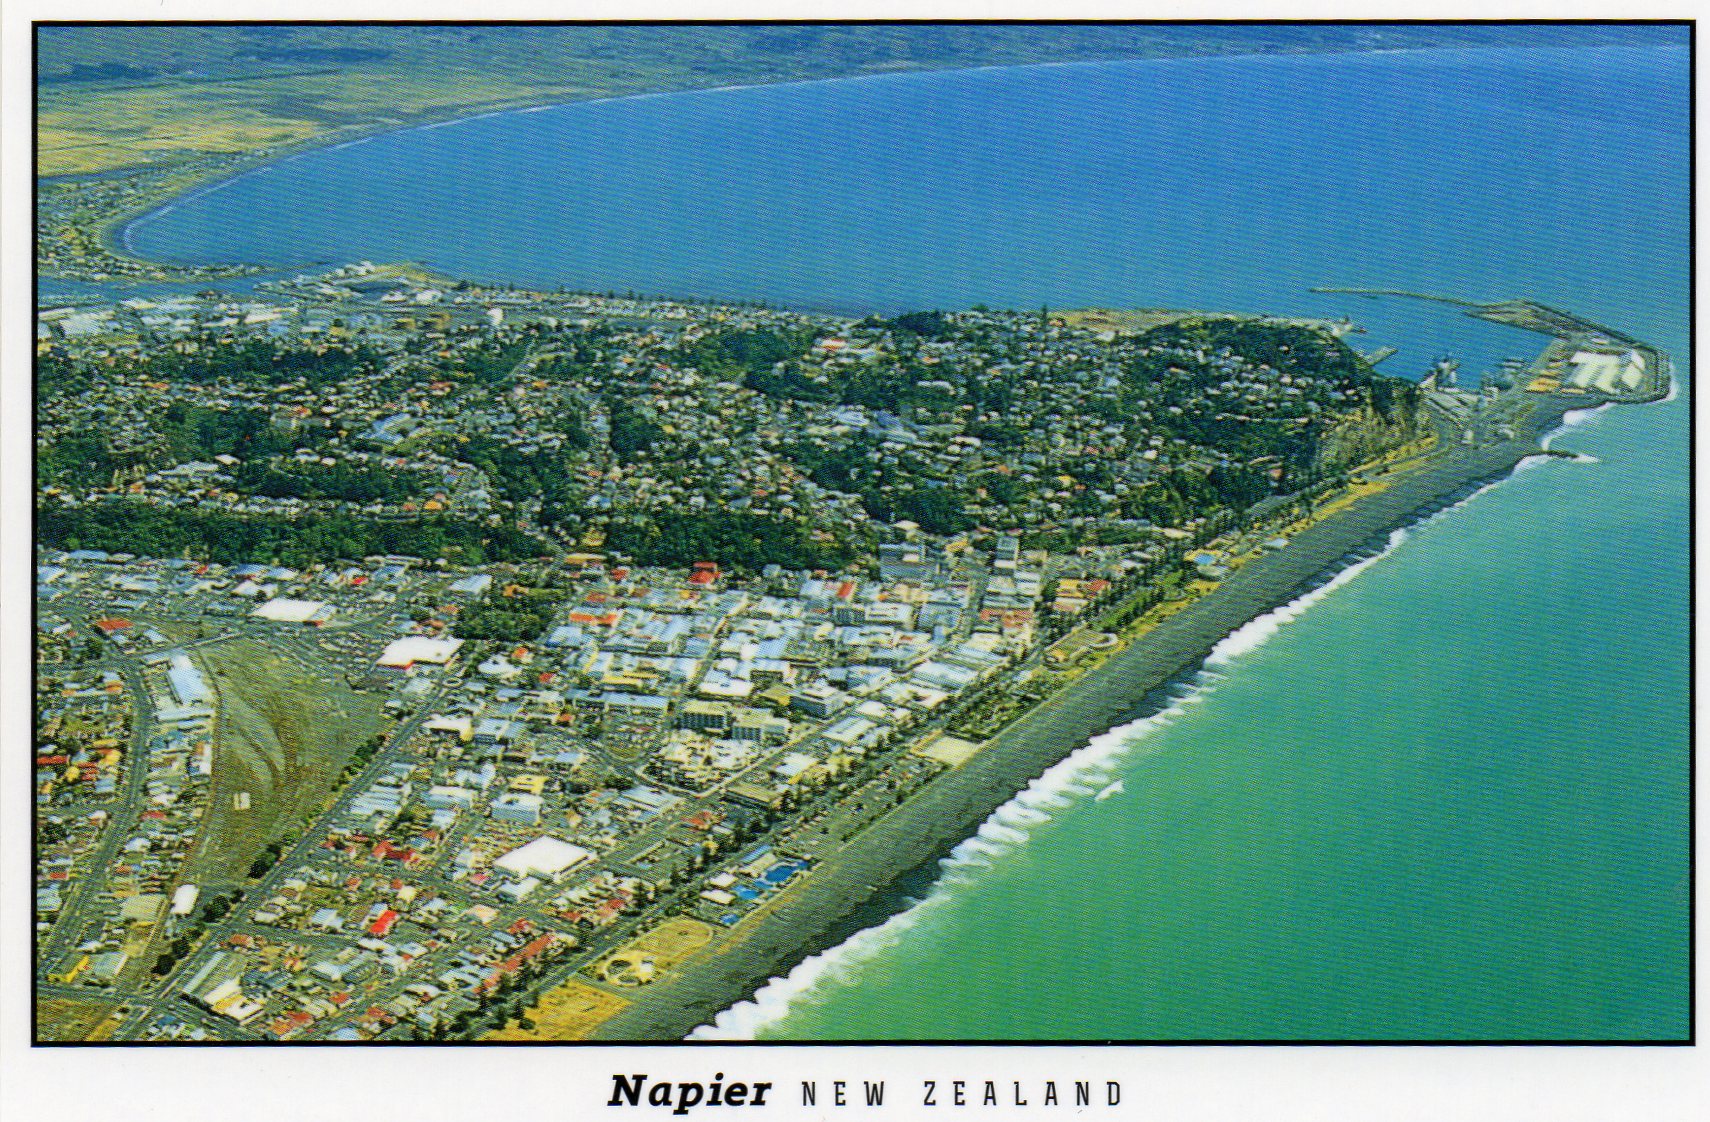 Postcard of Napier, New Zealand, published by www.nzsouvenir.co.nz